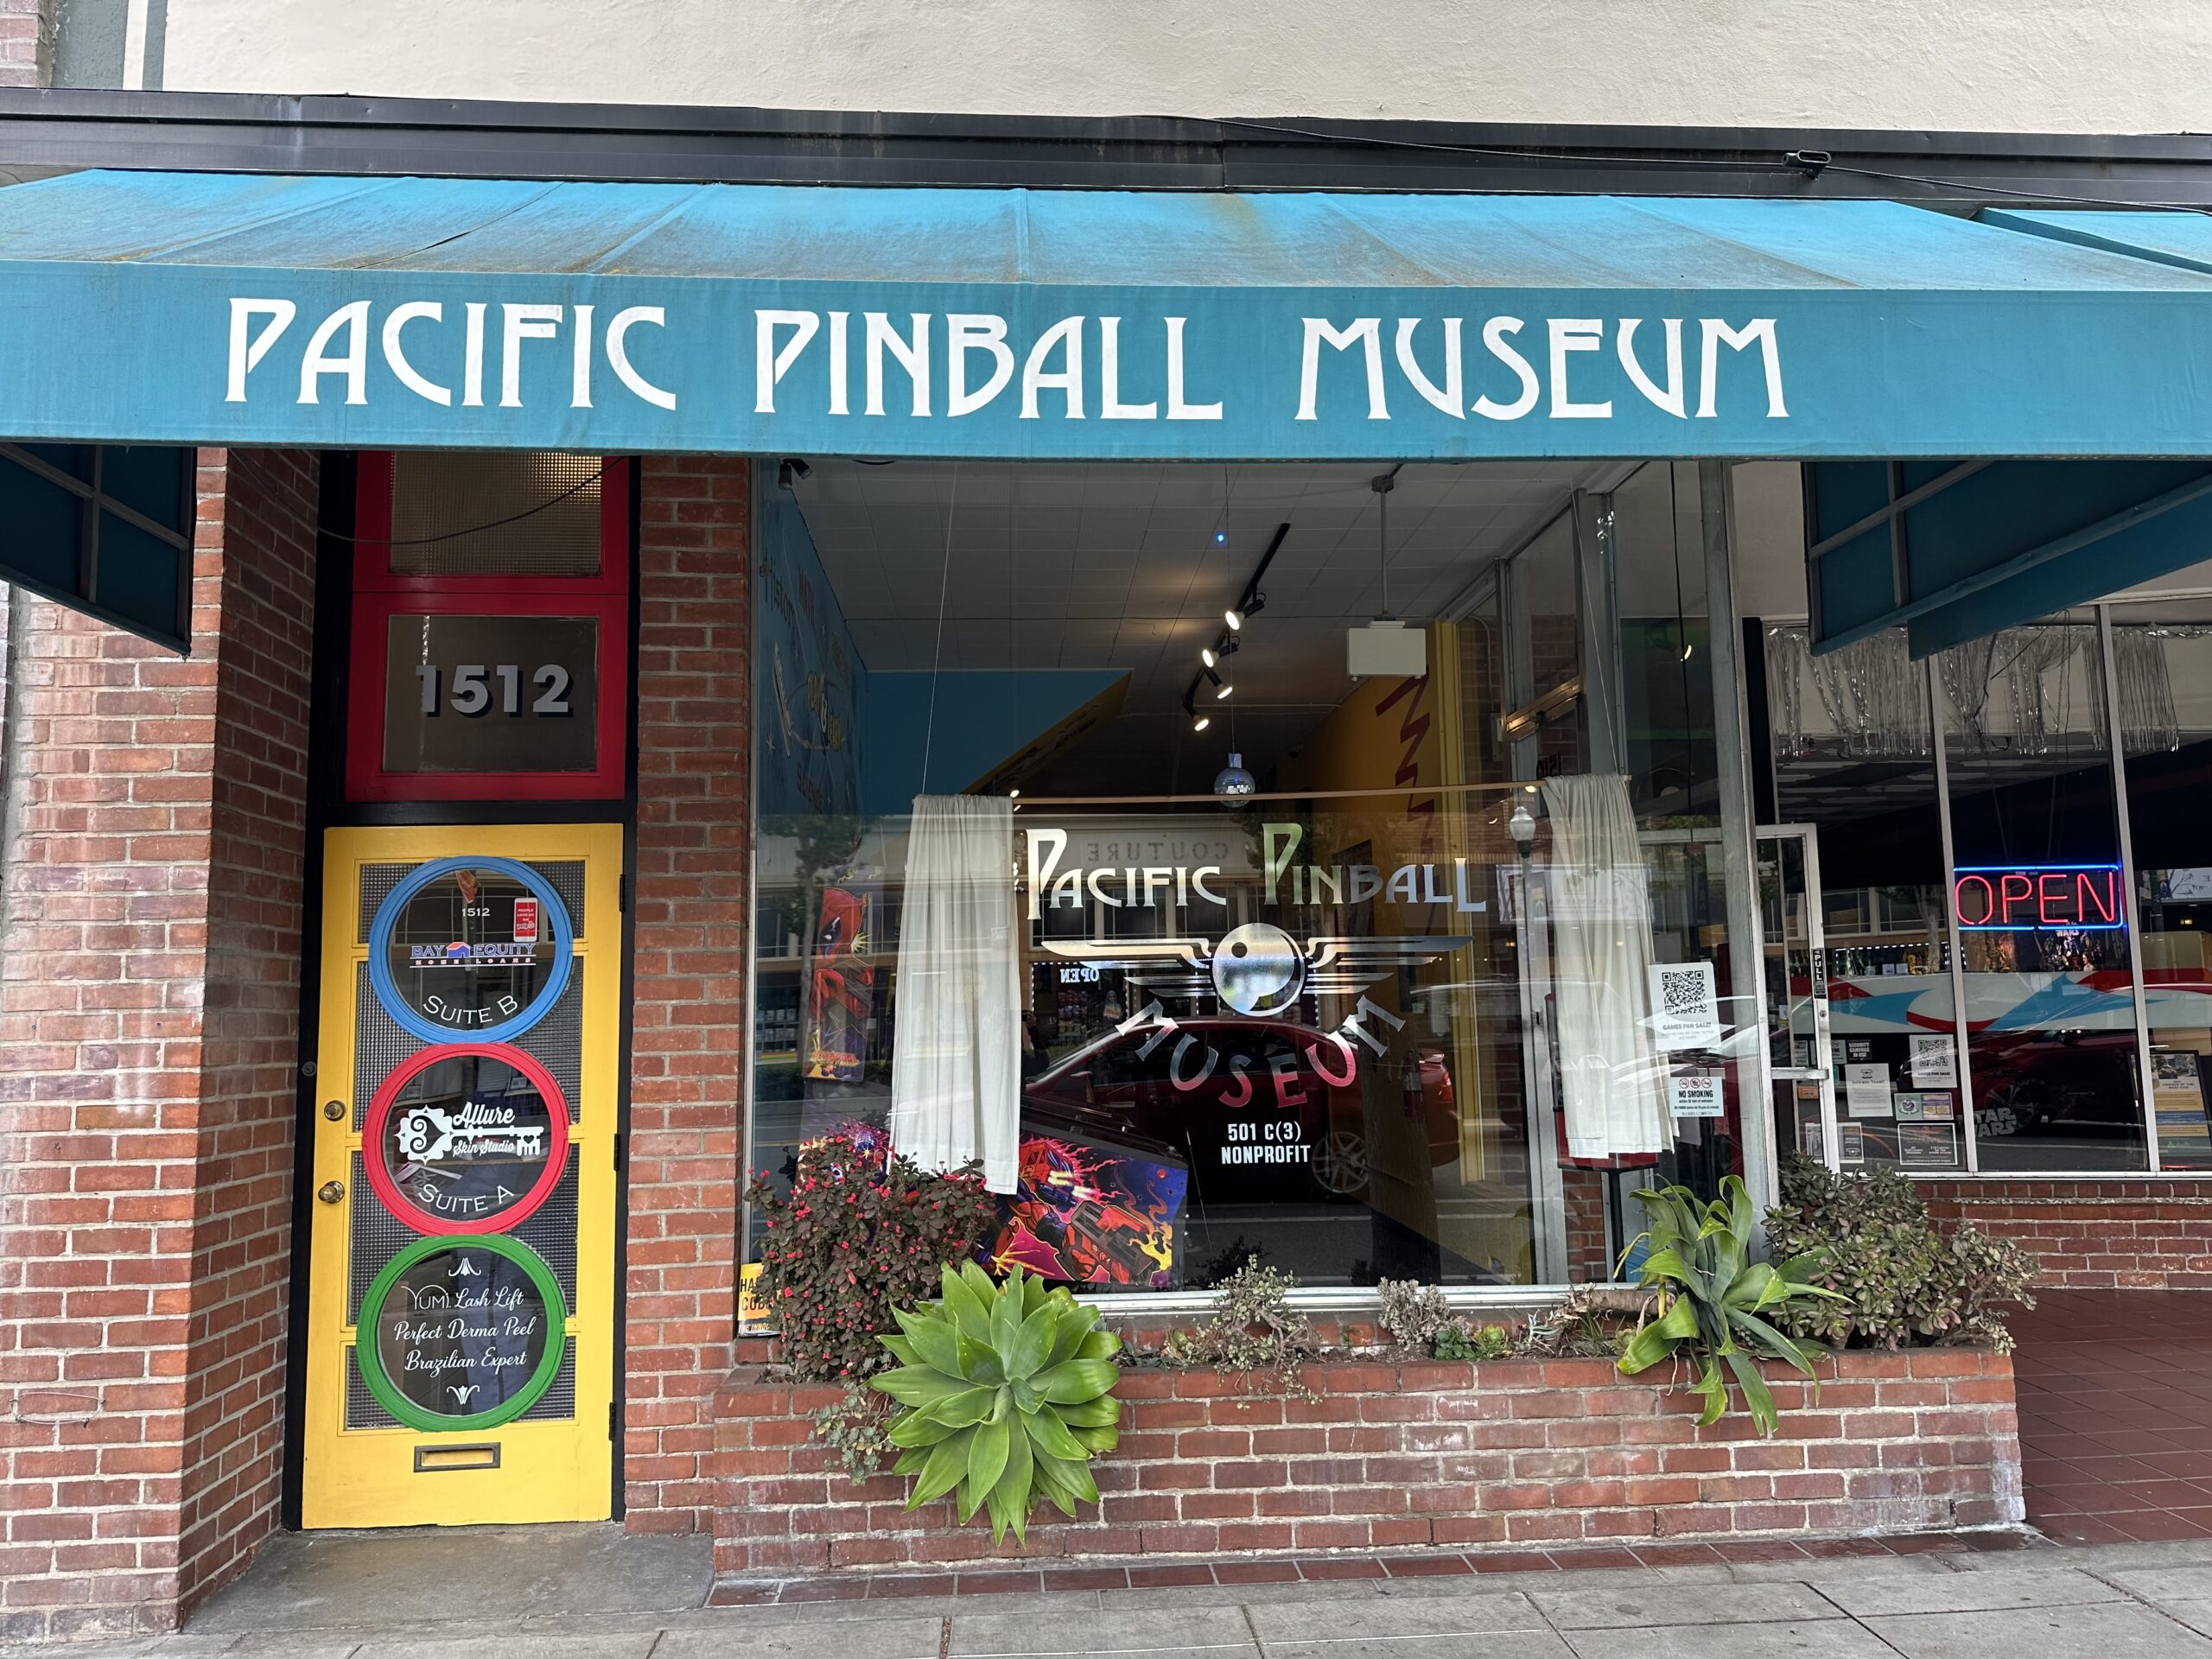 Pacific Pinball Museum - Wikipedia